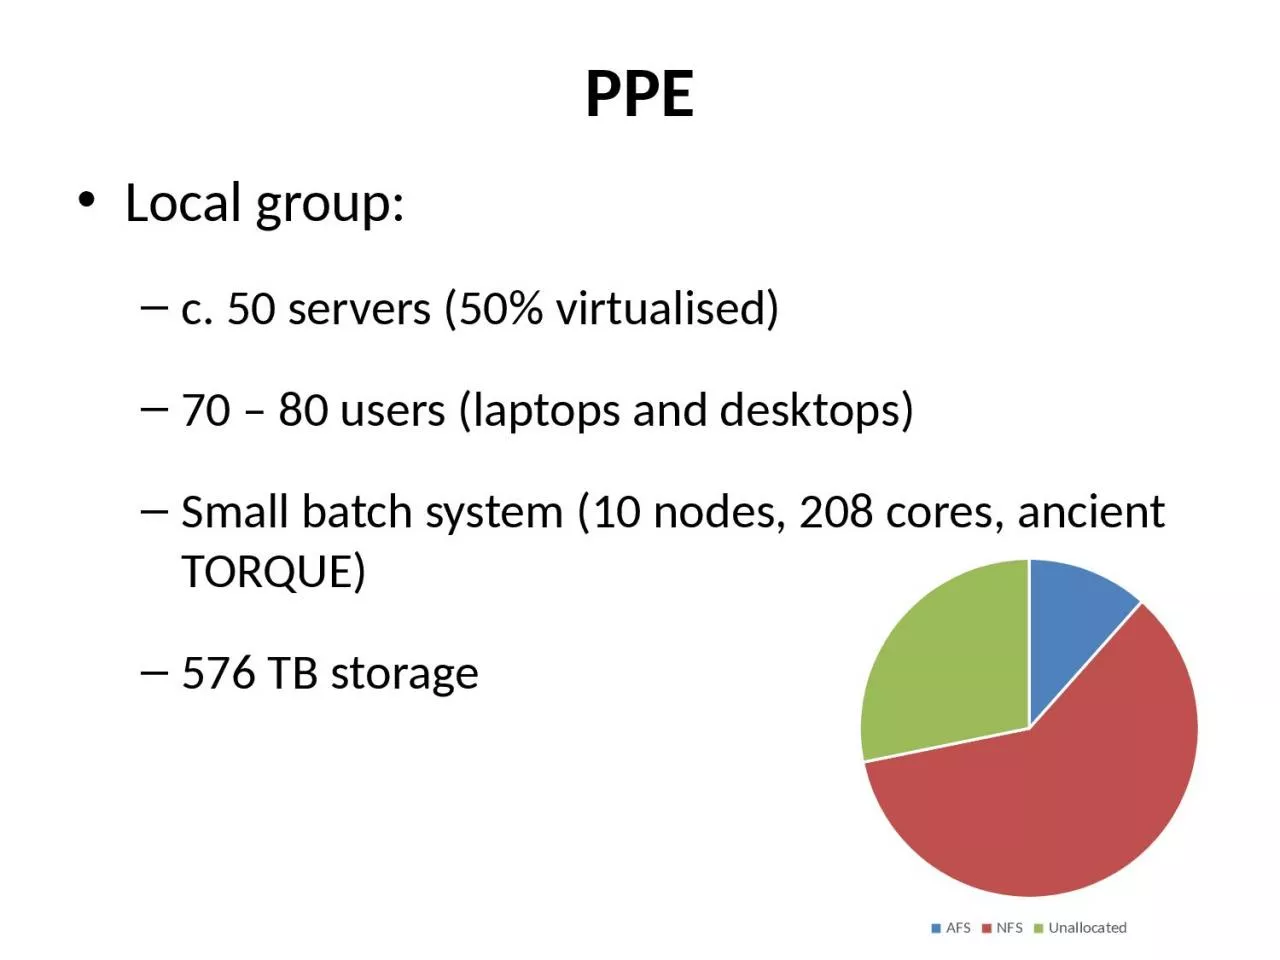 Local group: c. 50 servers (50% virtualised)